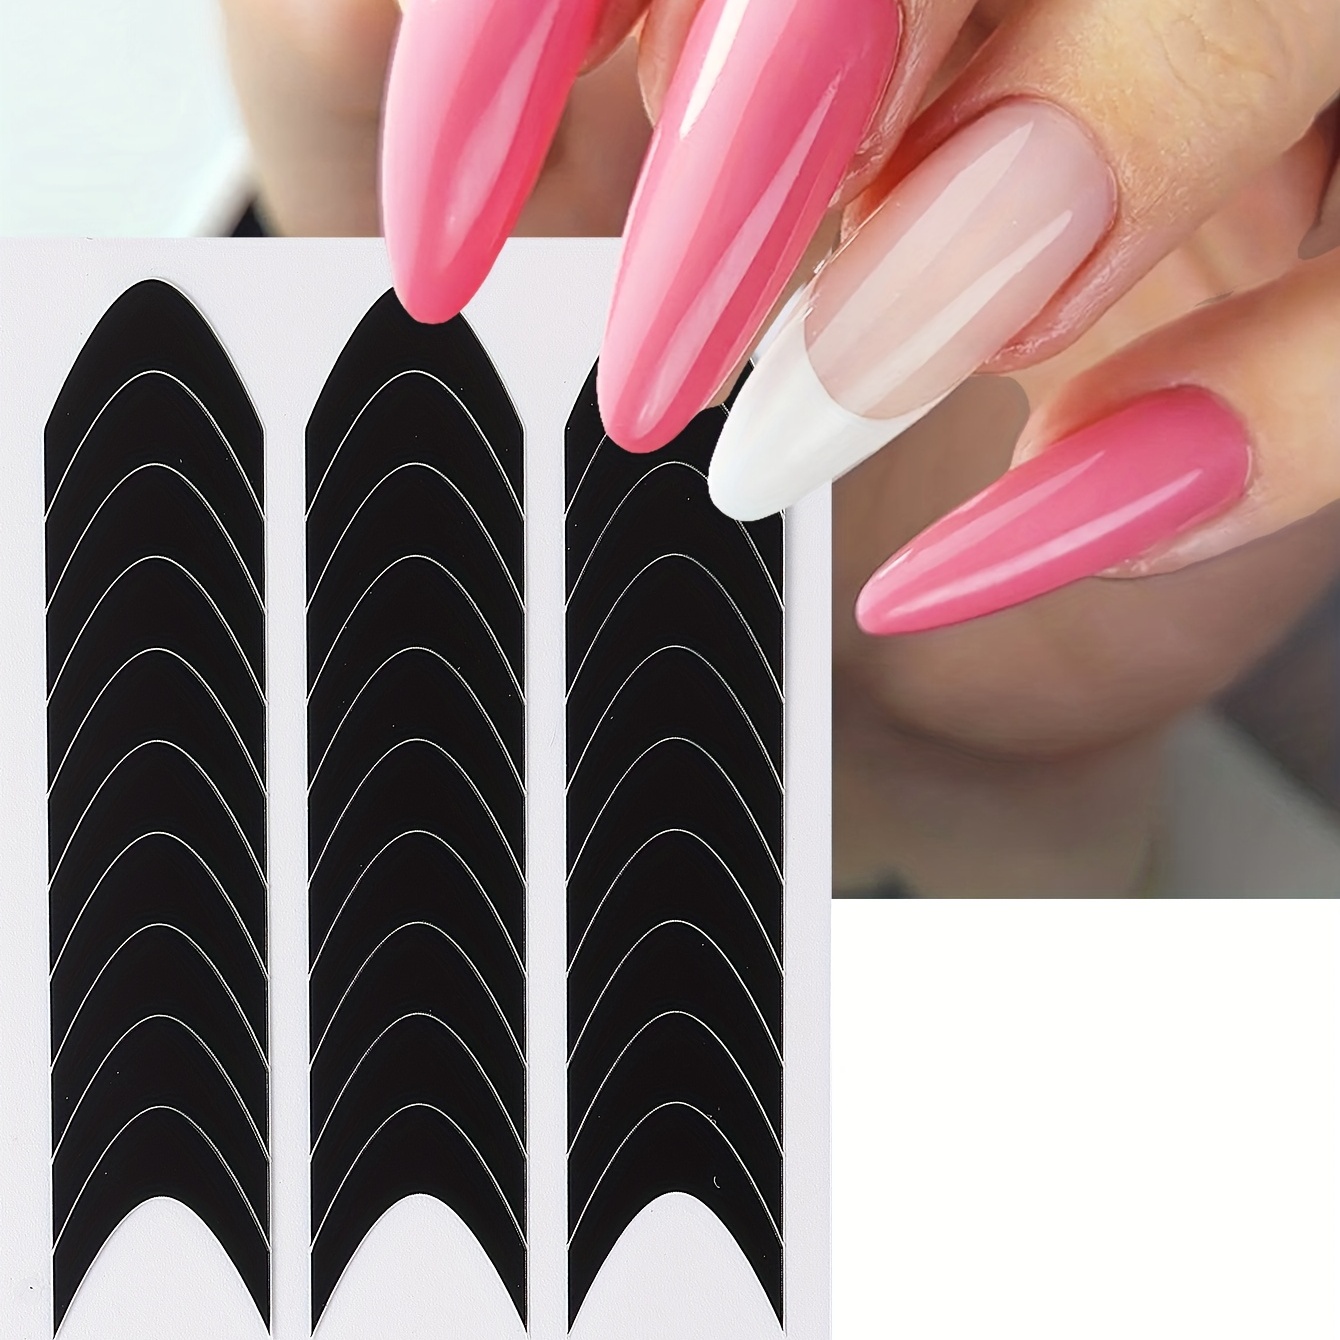 2PCS French Manicure Strip Nail Forms Fringe Tip Sticker DIY Wavy